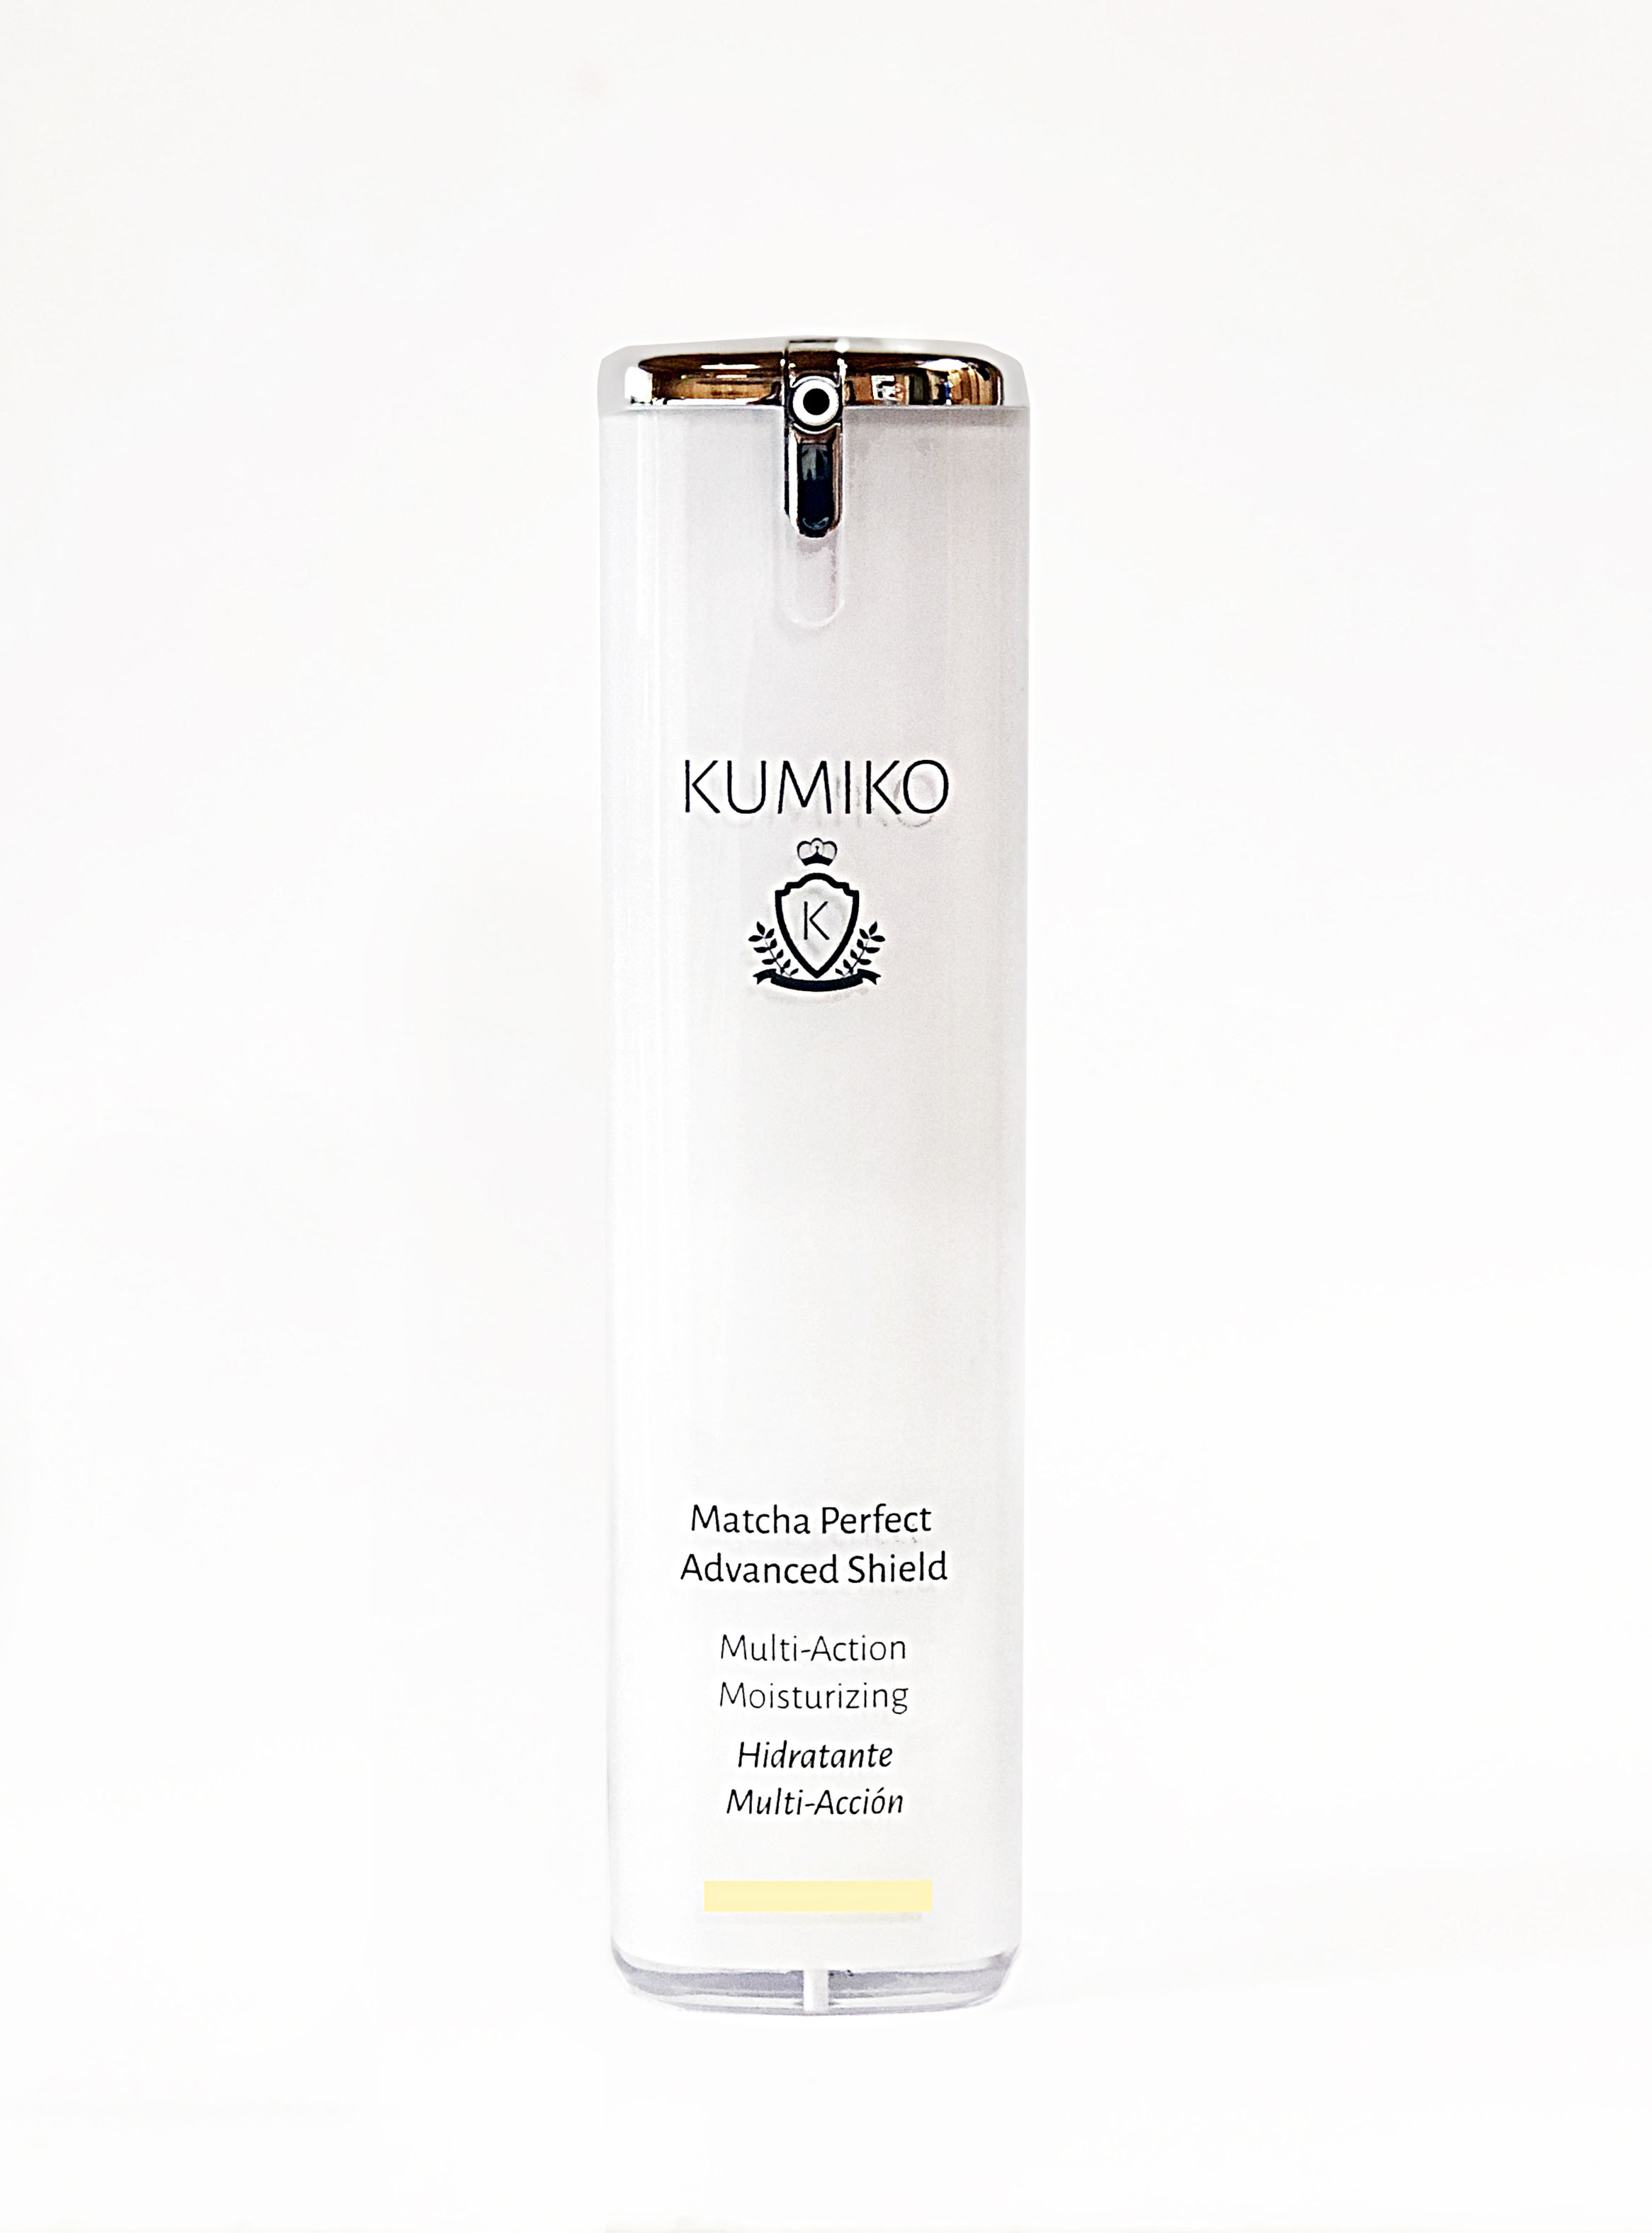 Crema Kumiko Hidratante de Matcha 50 ml